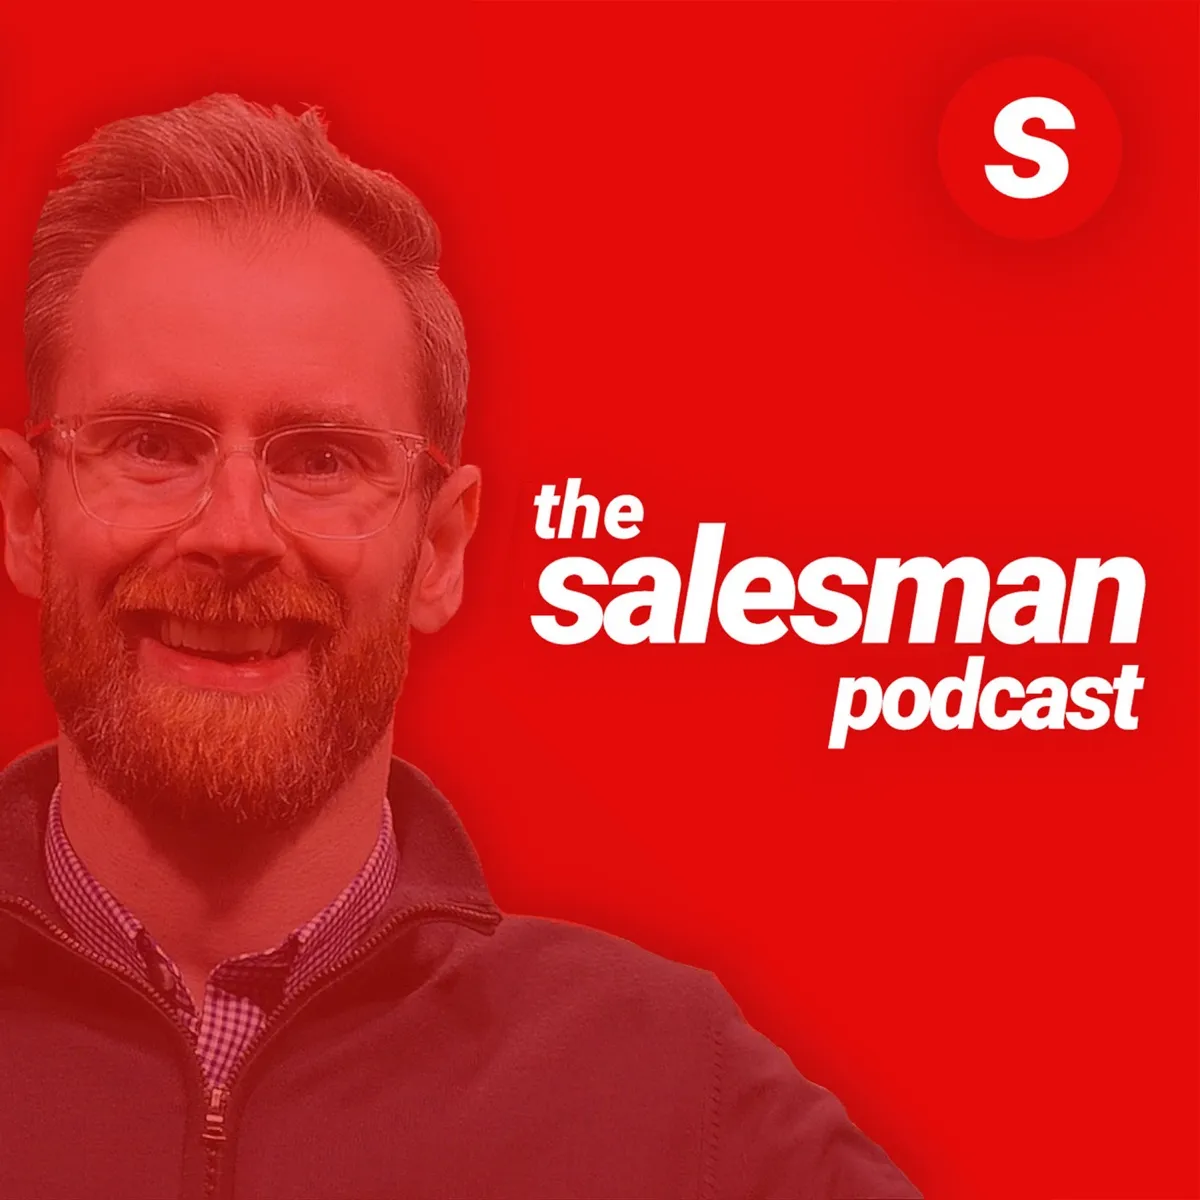 The Salesman Podcast